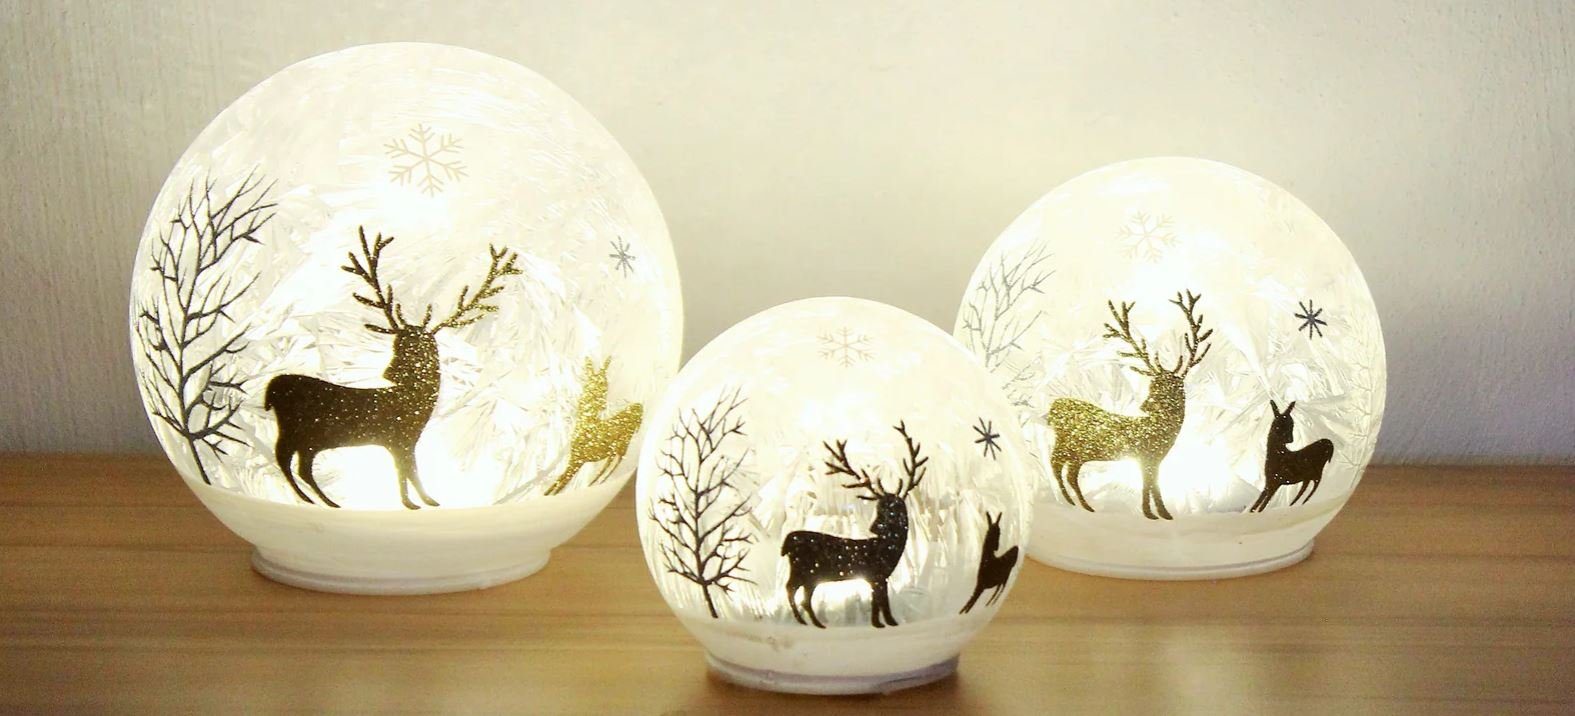 ideas... great Frost-Finish LED Echtglas, 3tlg., "Winterwald", Kugelleuchte Luna24 Weihnachtsszene simply